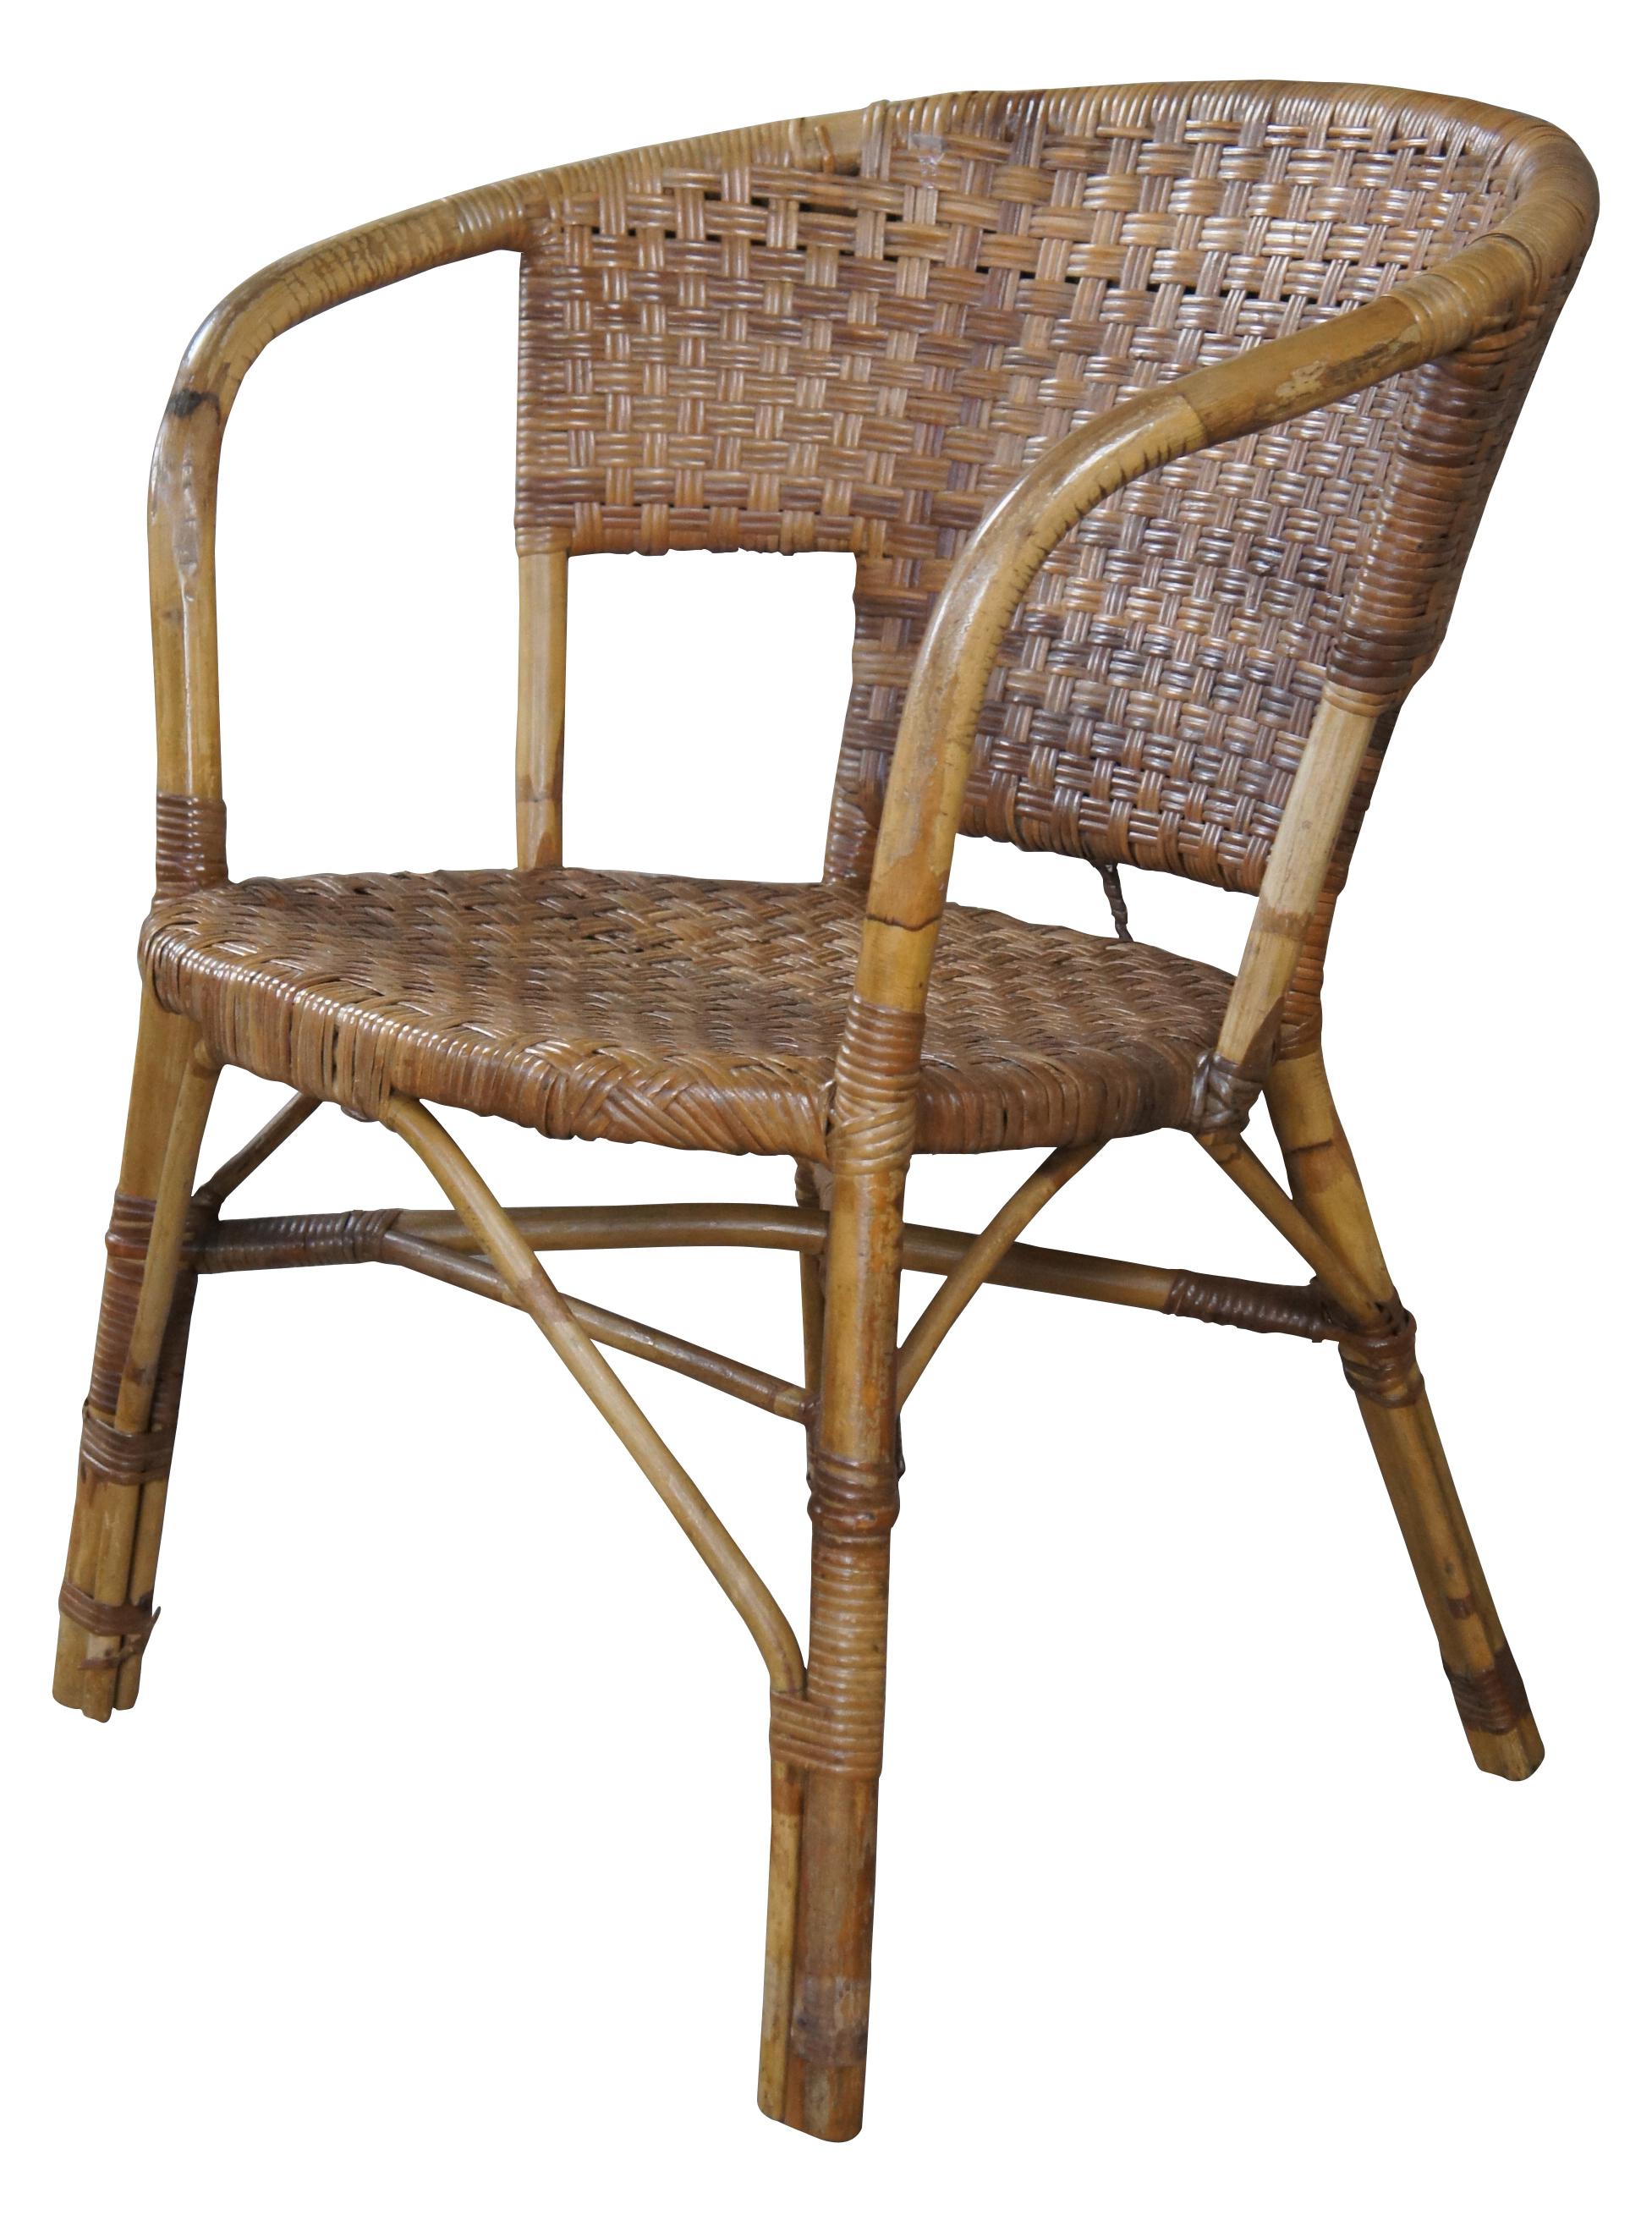 Bohemian Antique Bentwood Bamboo Woven Wicker Rattan Arm Chair Boho Boheimian For Sale